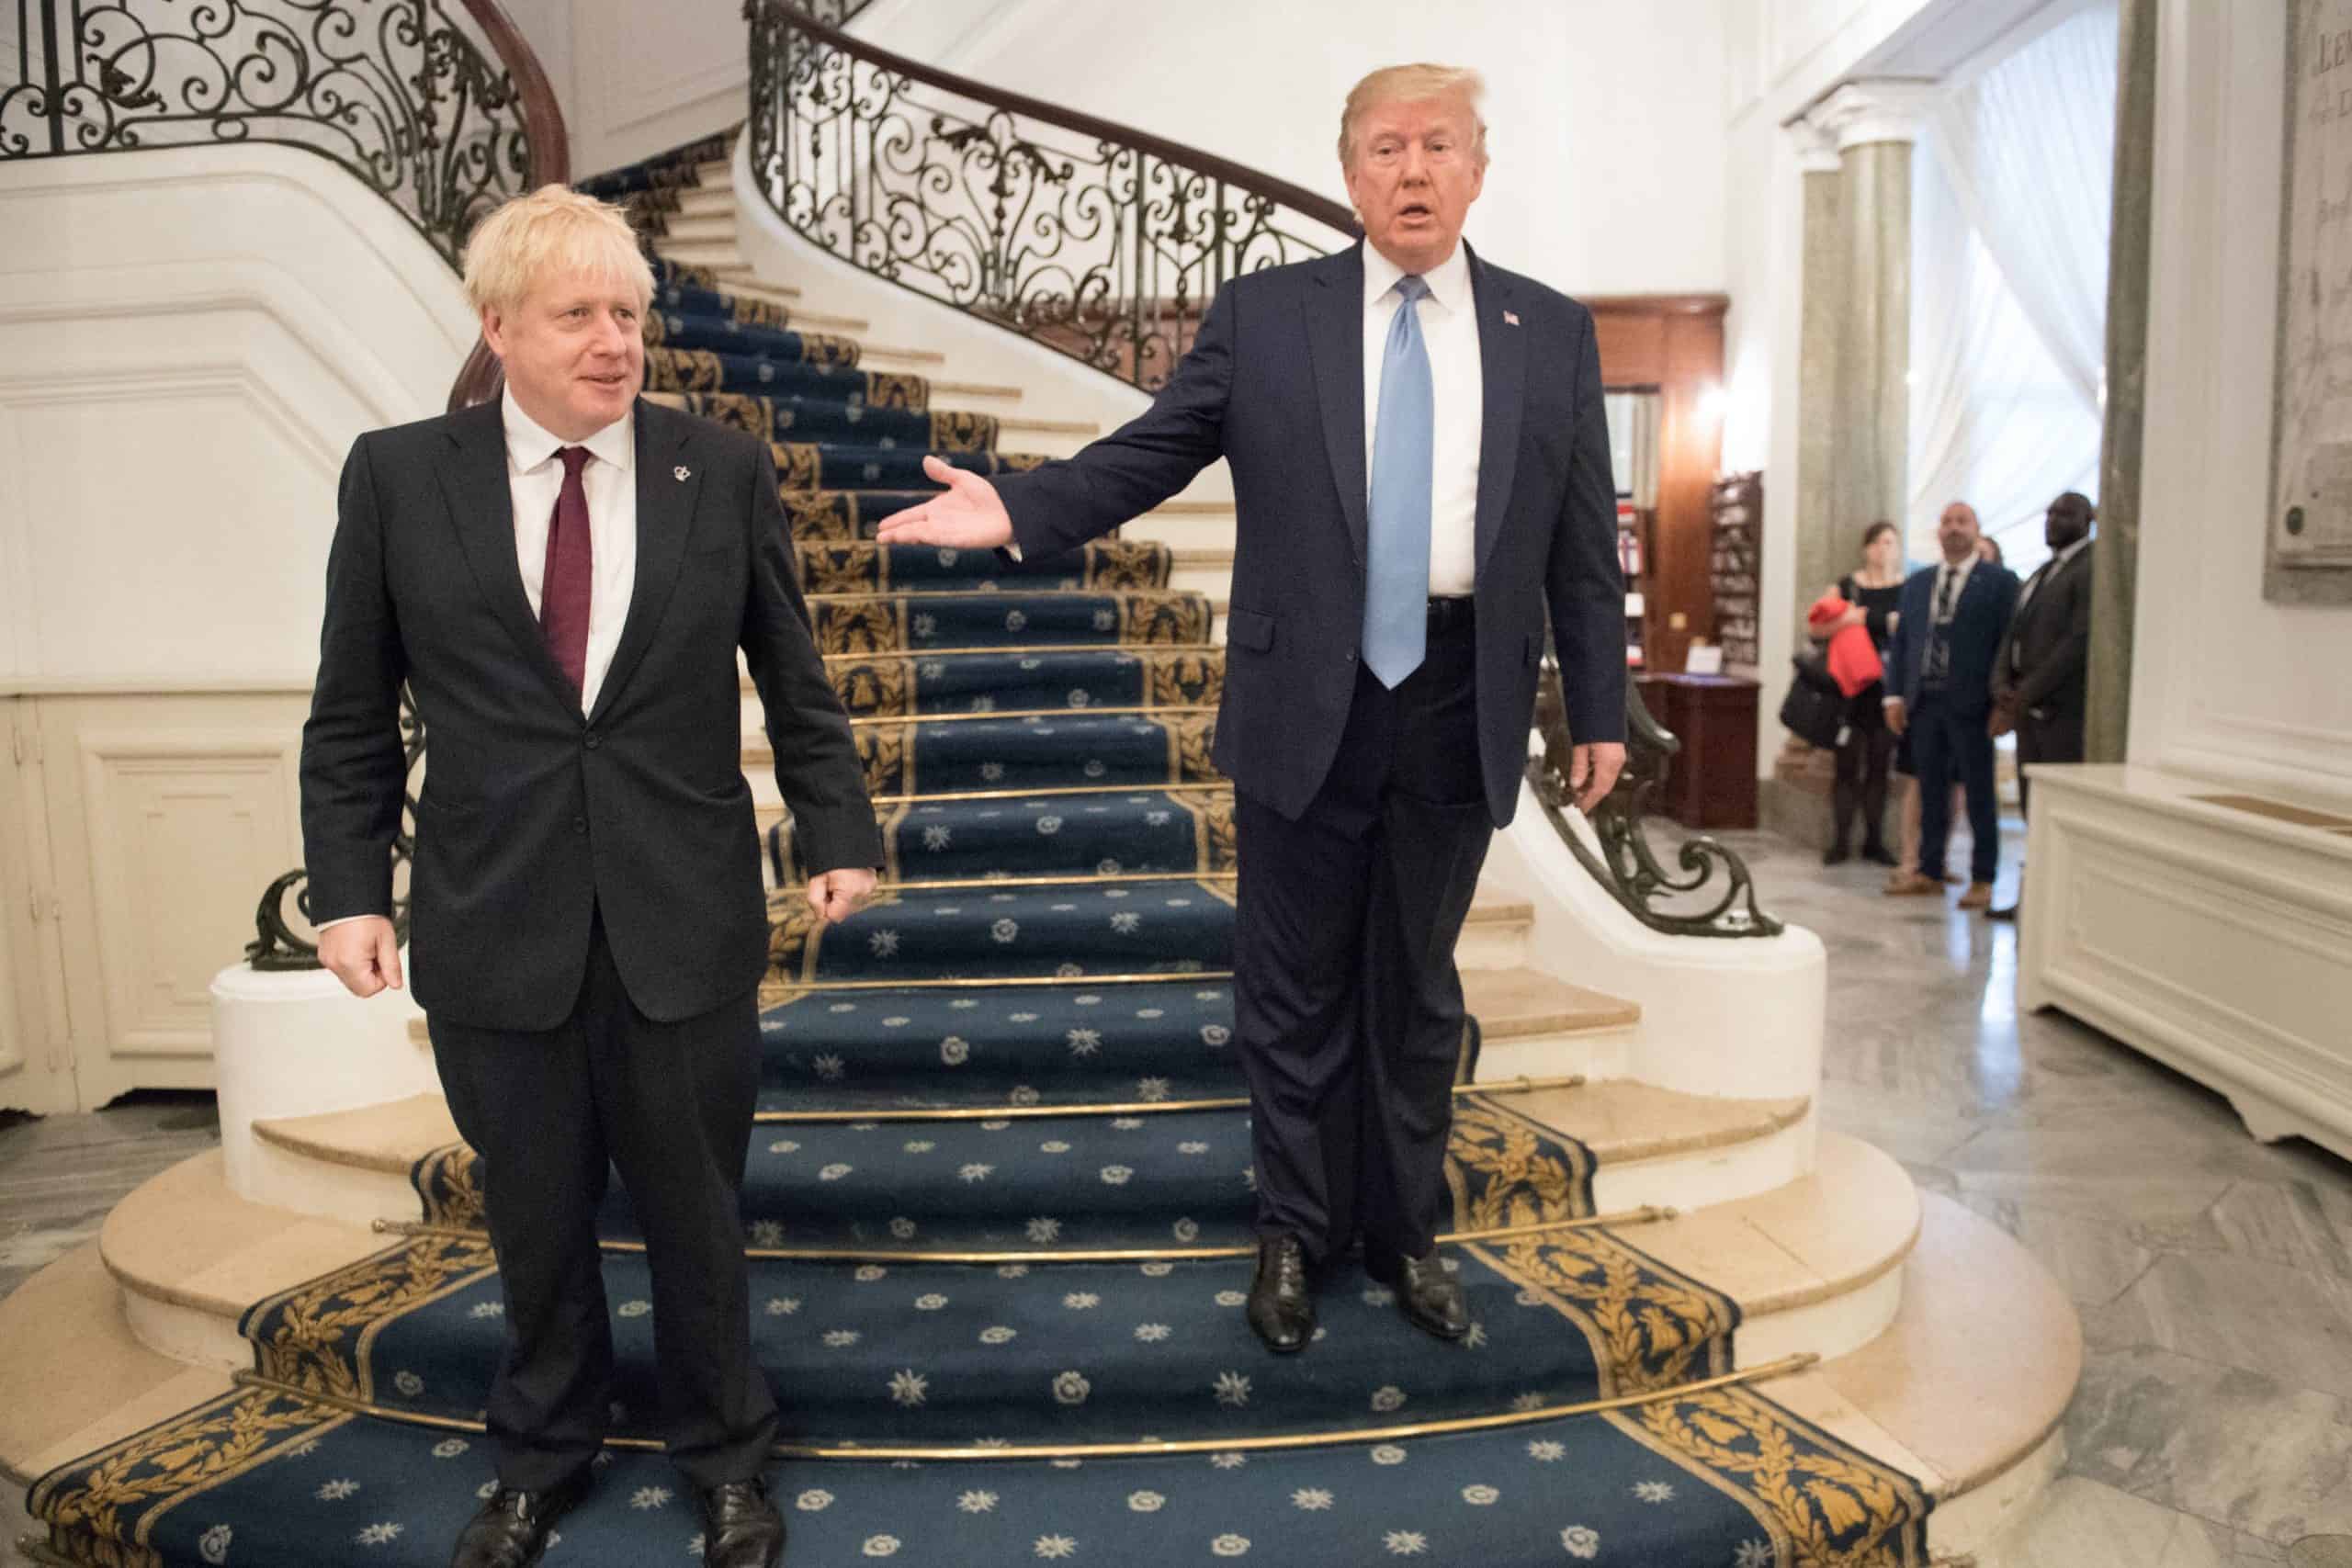 Ex-diplomat says Boris Johnson ‘fascinated’ by Donald Trump